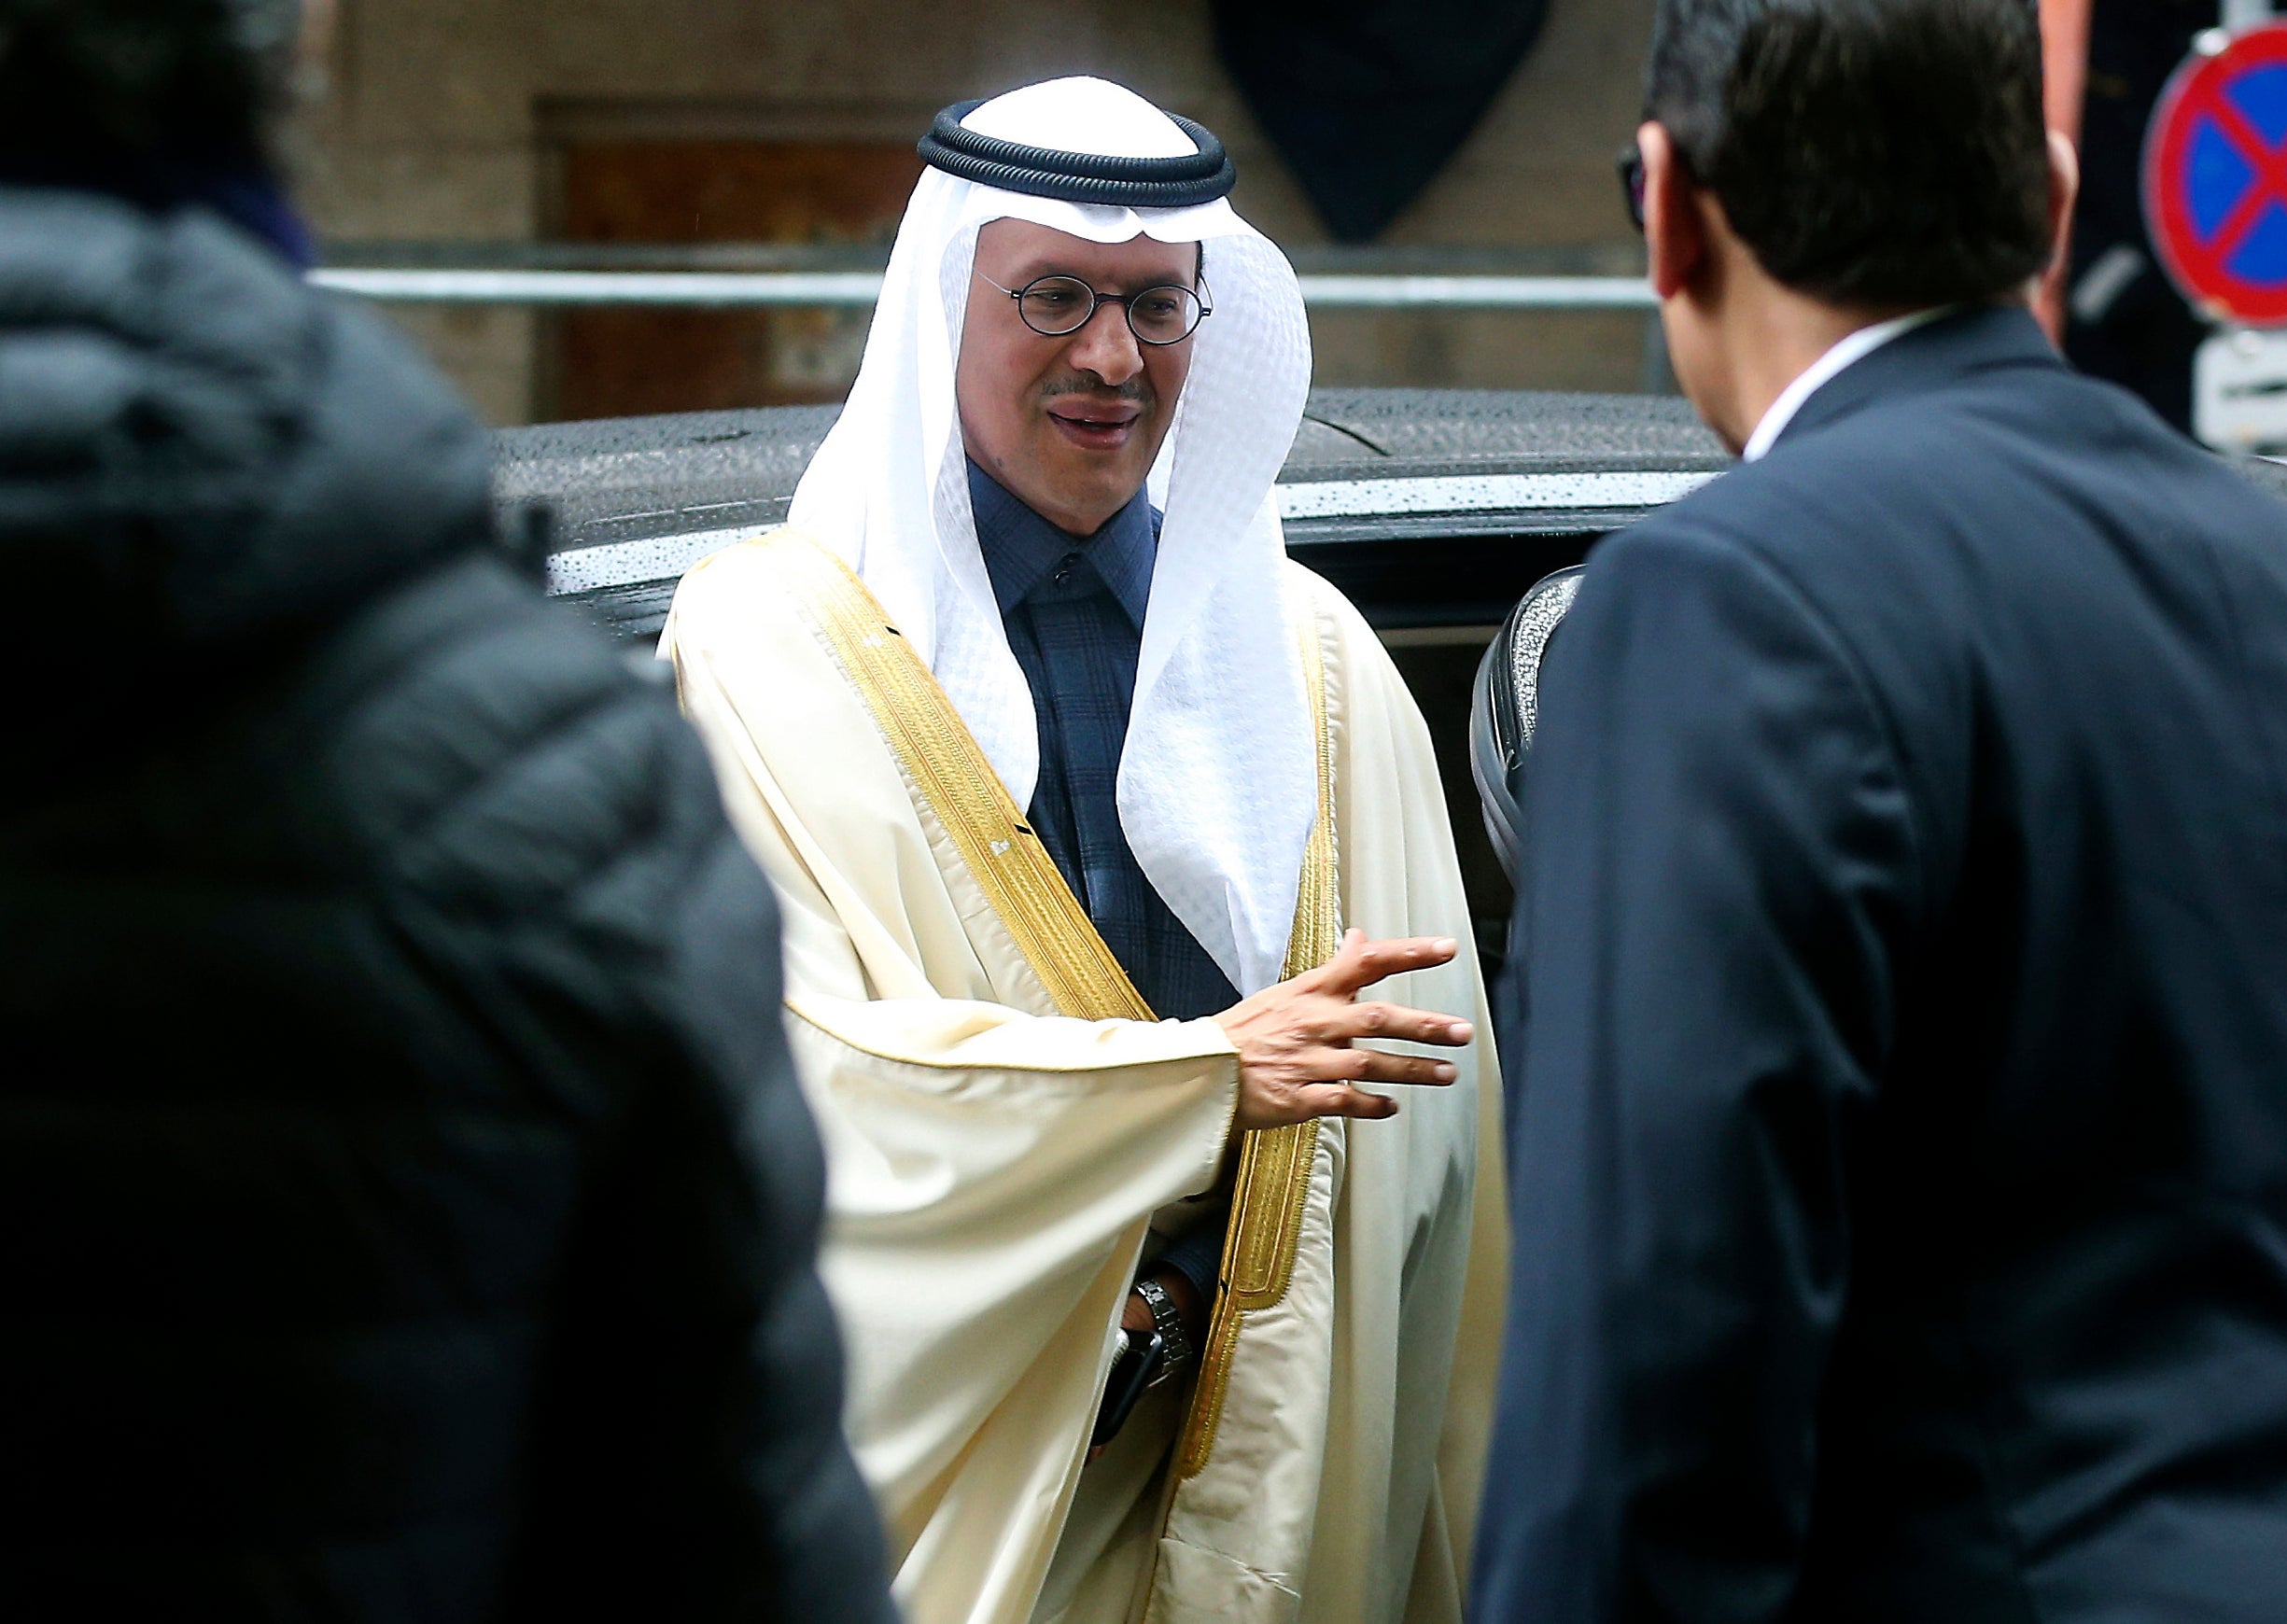 Prince Abdulaziz bin Salman, Saudi Arabia’s energy minister, at the same Opec meeting